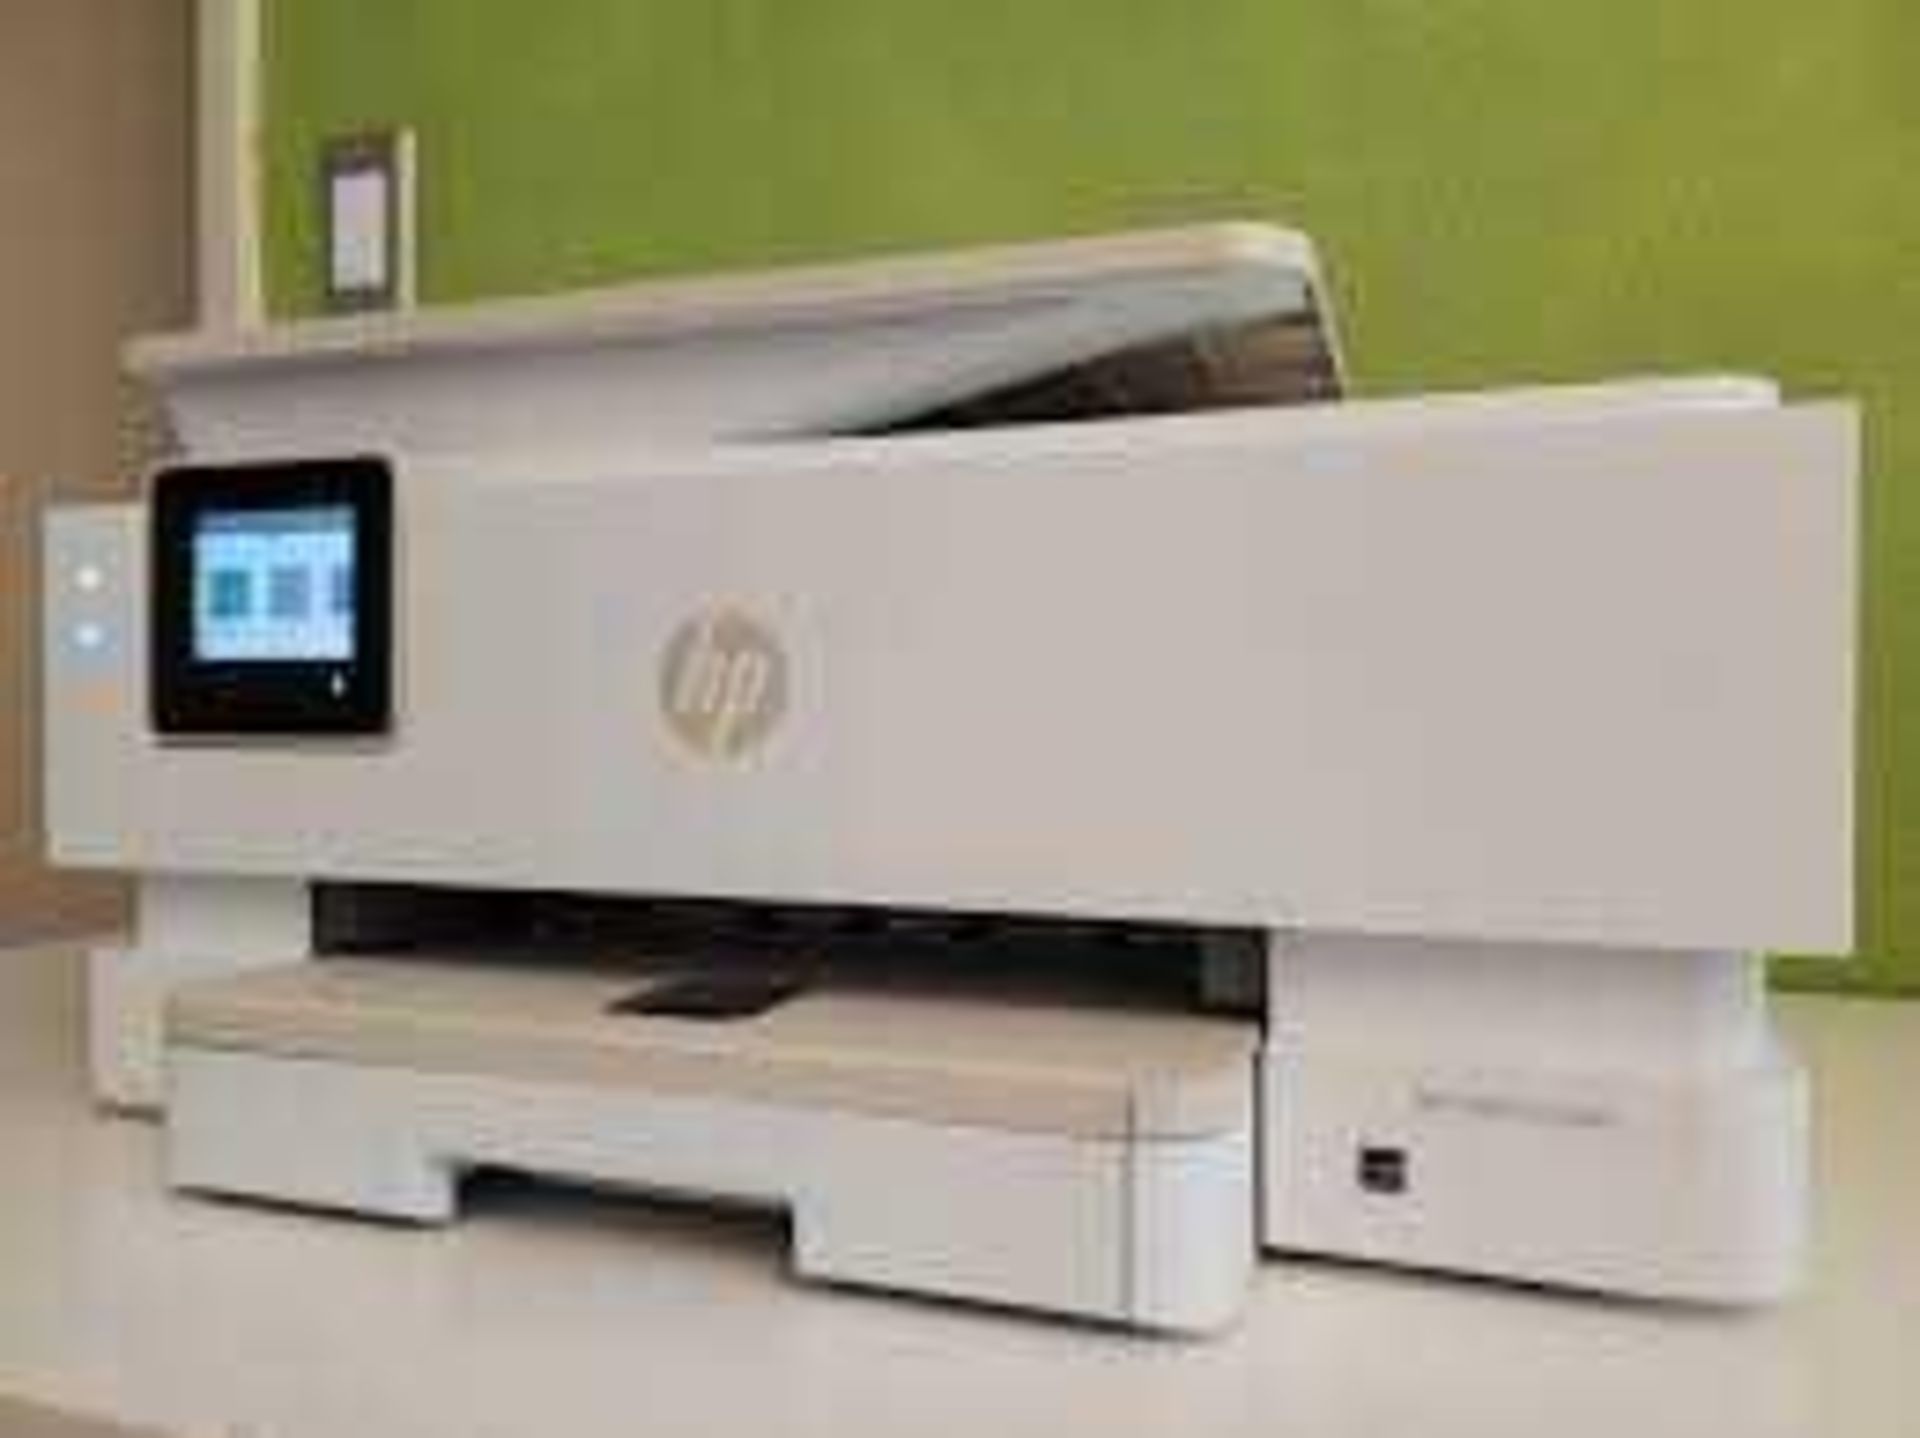 RRP £120 Boxed Hp Envy Inspire 7900E Printer Scanner Copier